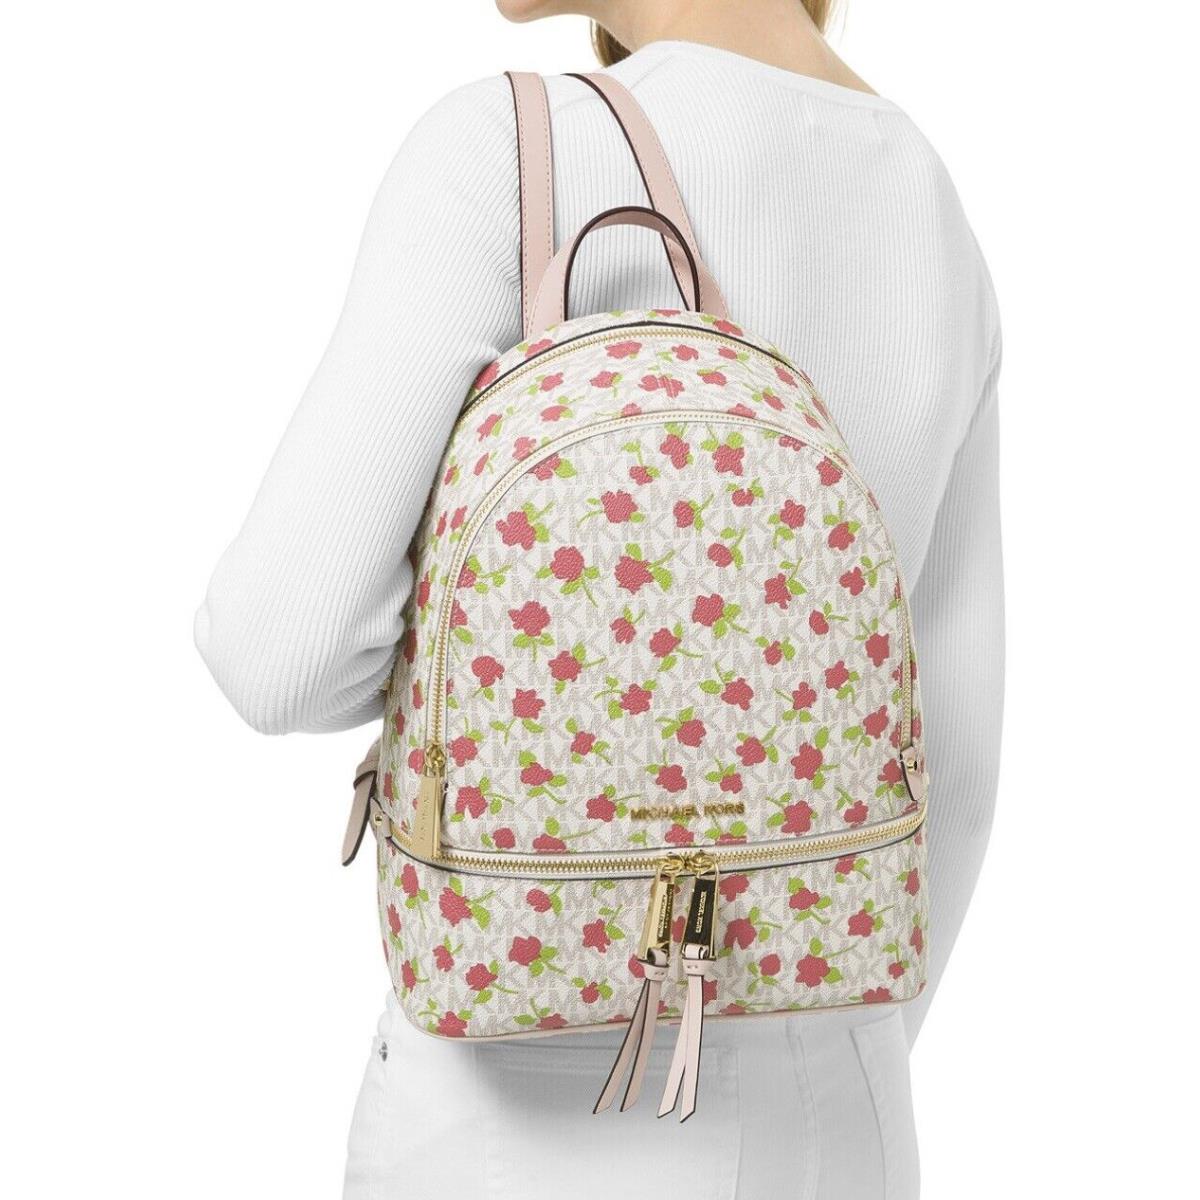 Michael Kors Rhea Zip Medium Backpack Vanilla Multi Color with Flowers